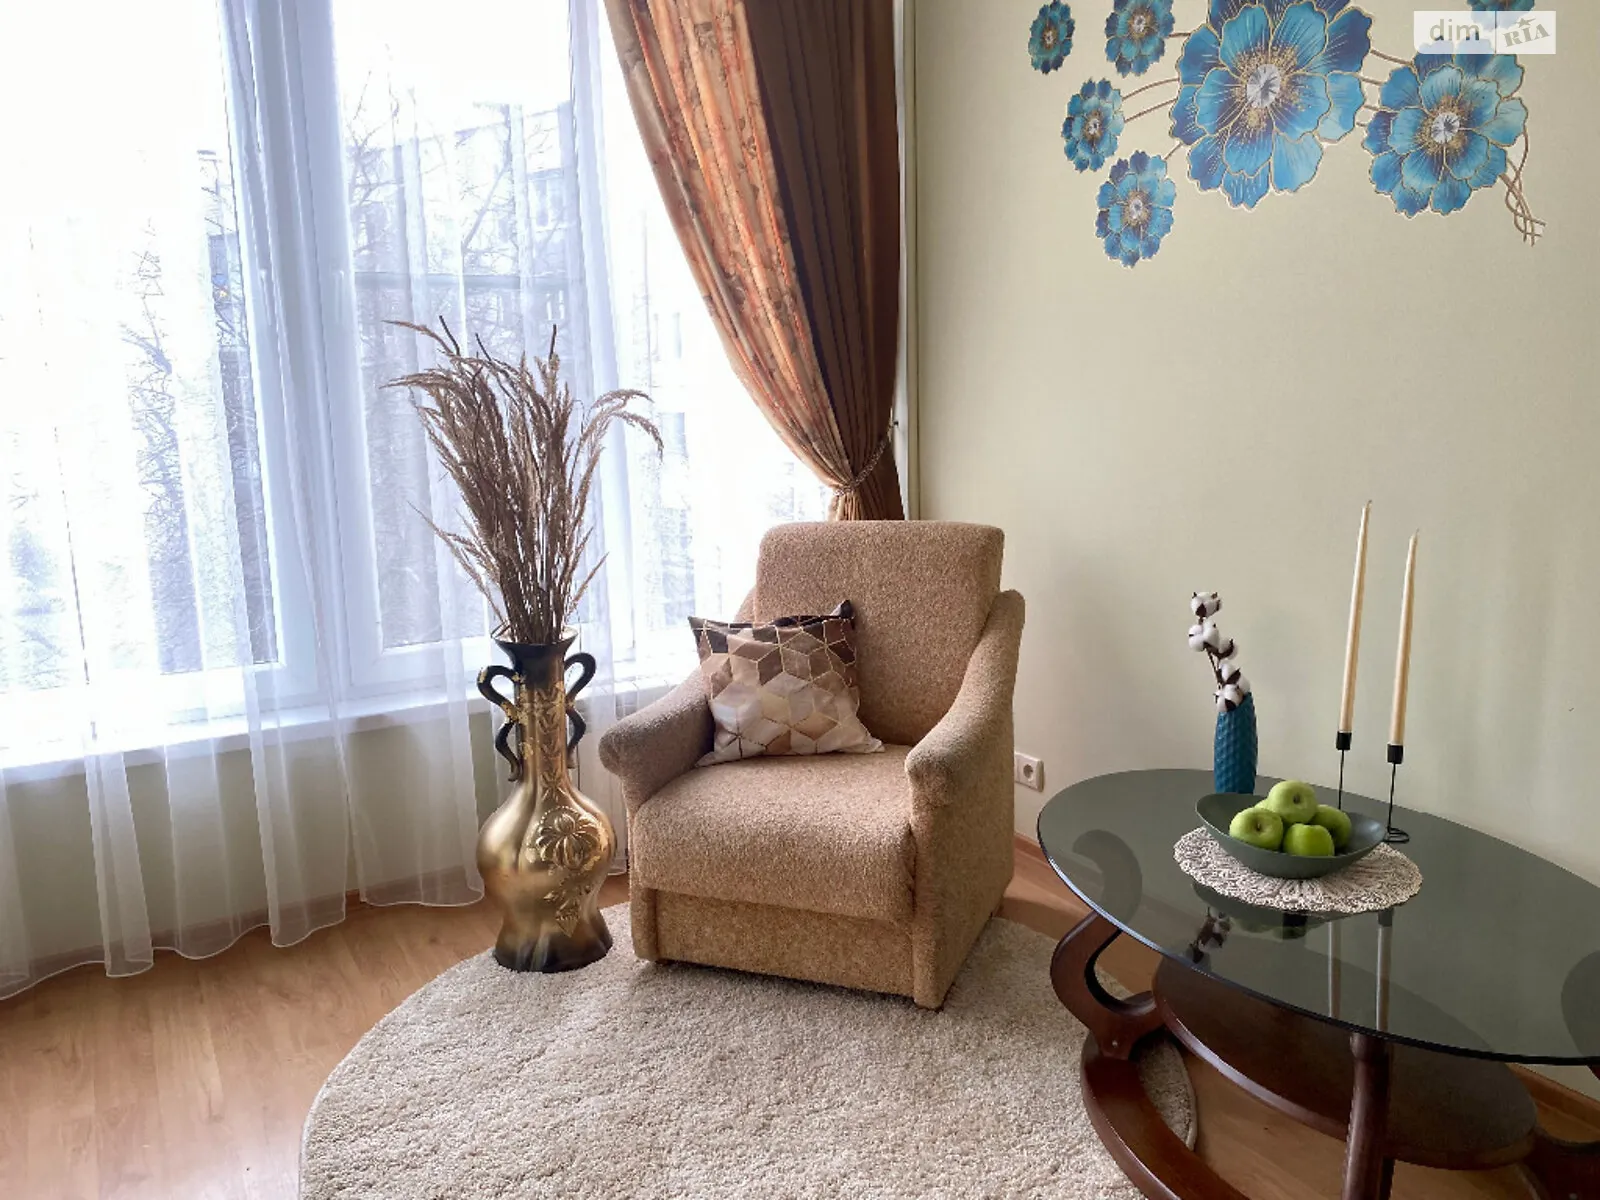 2-кімнатна квартира у Тернополі, цена: 950 грн - фото 1